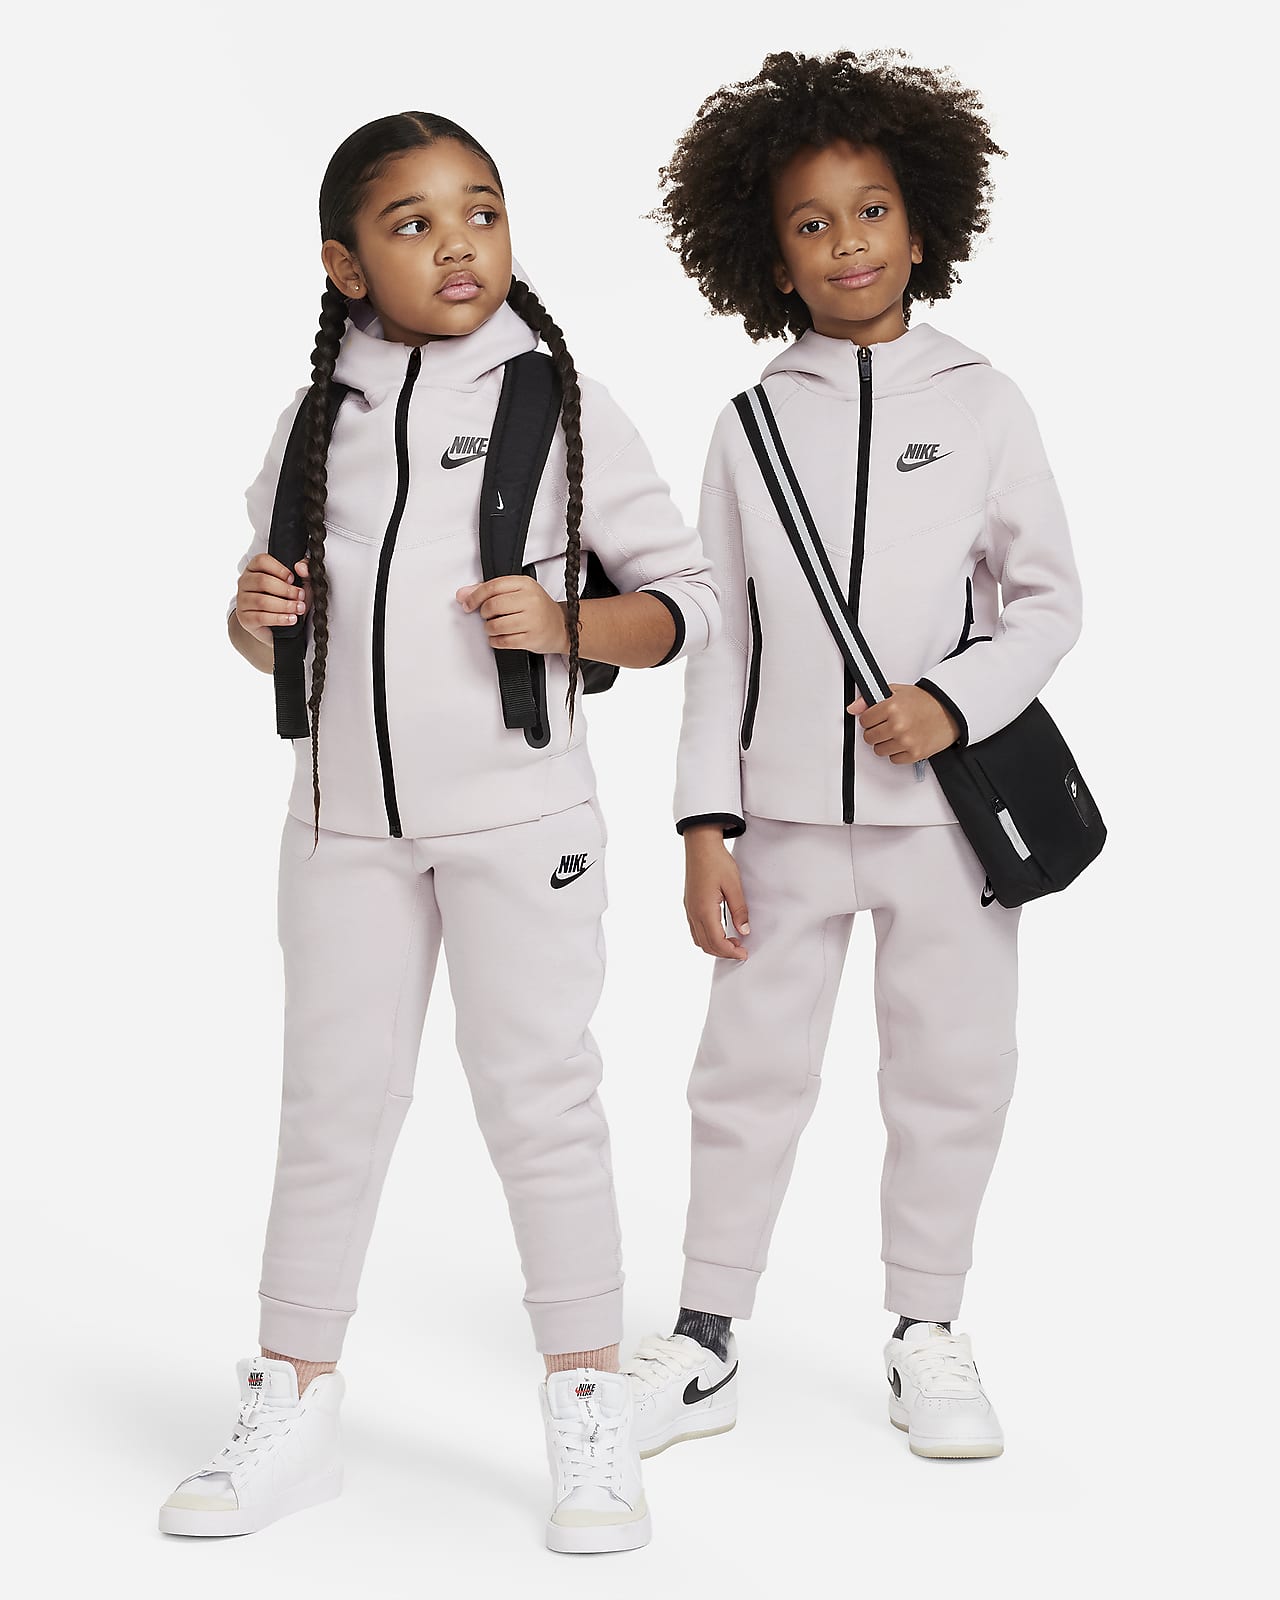 Nike Sportswear Tech Fleece Full-Zip Set Conjunt de dessuadora amb caputxa de dues peces - Nen/a petit/a